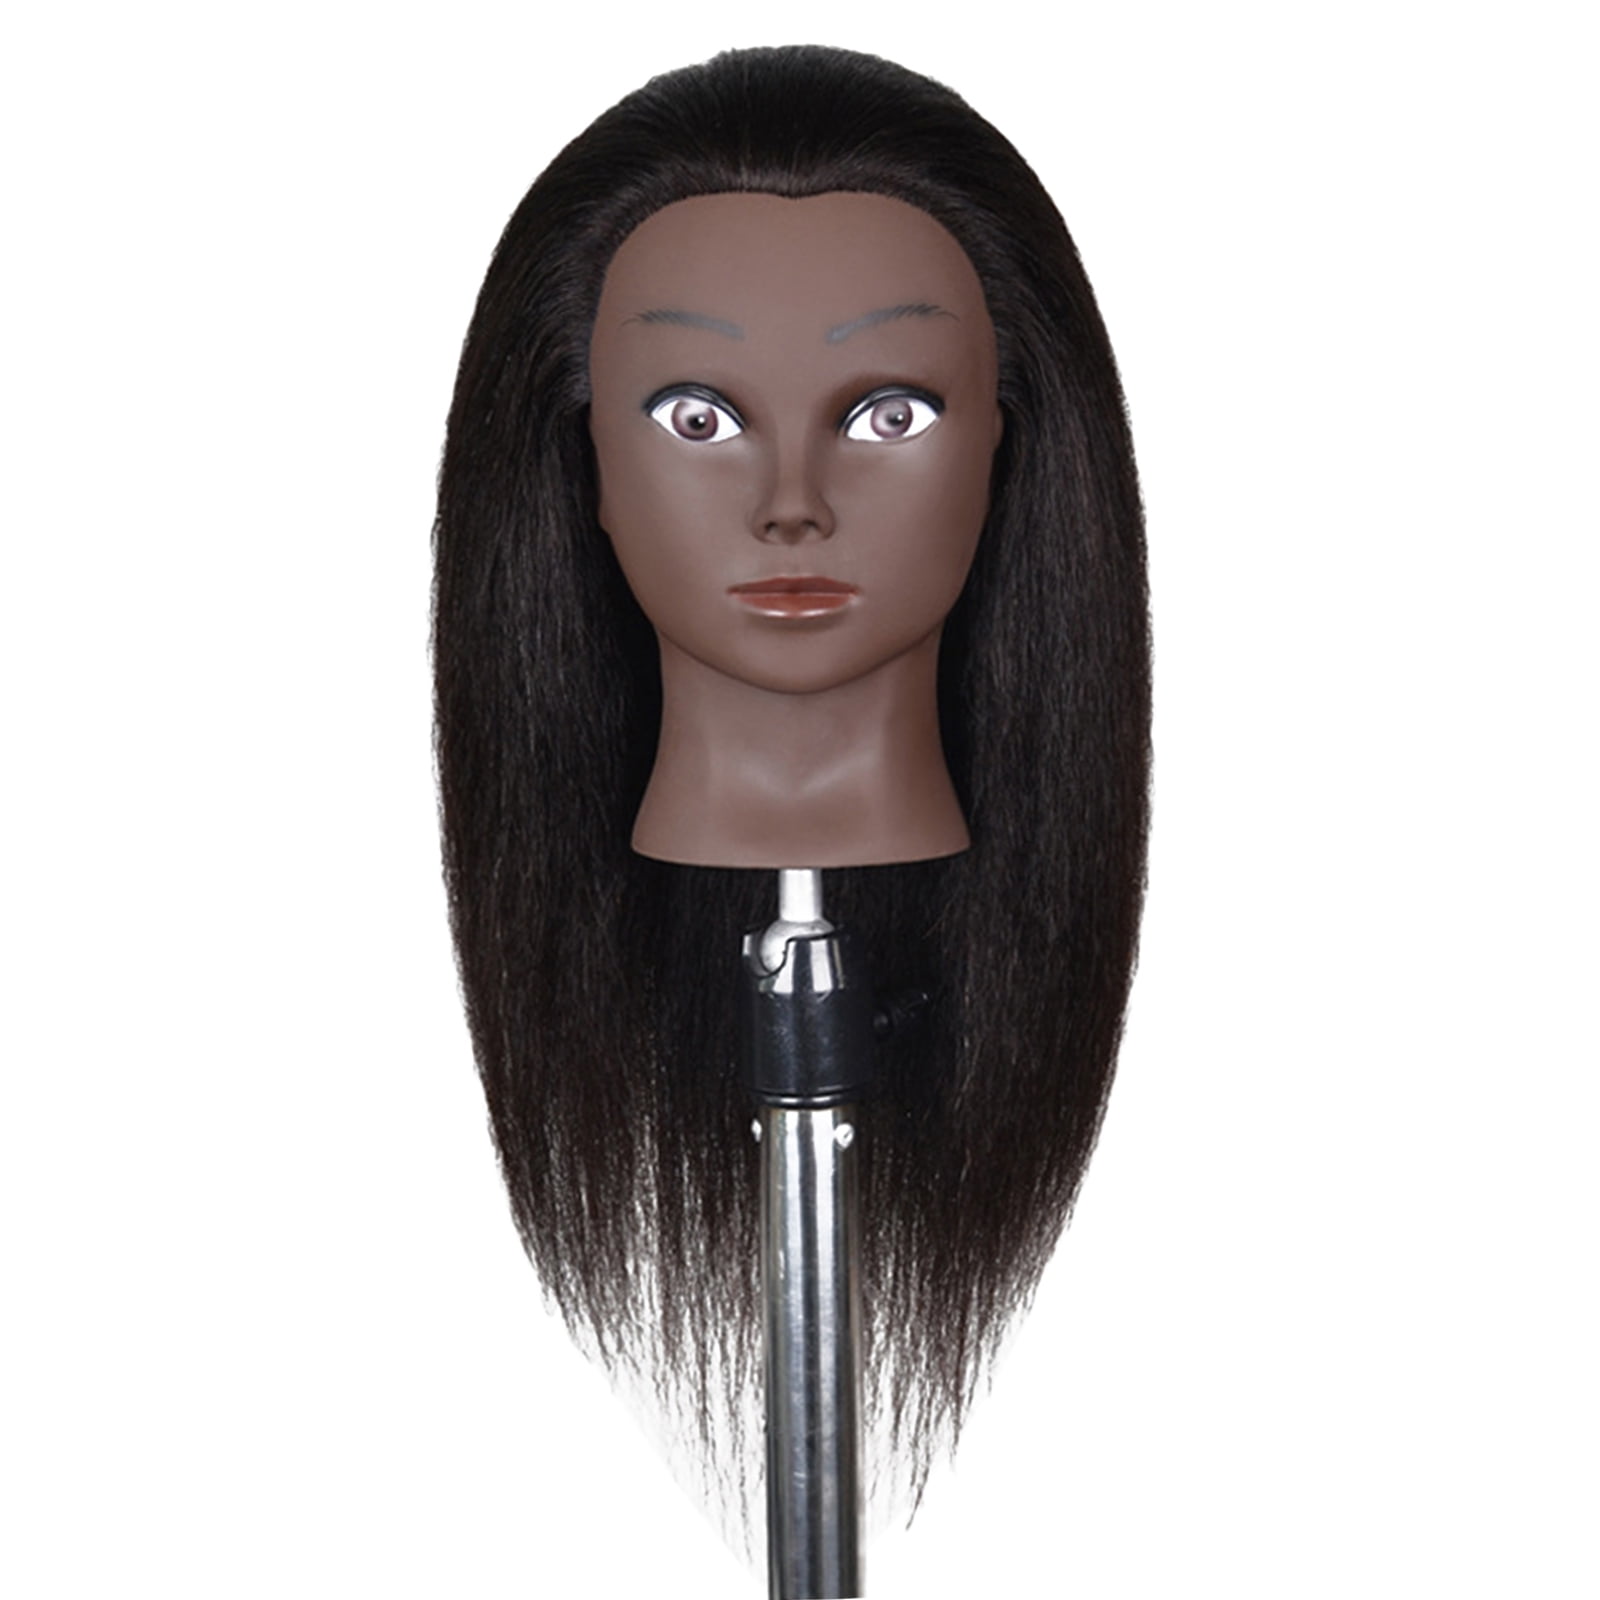 Aggregate 70+ black mannequin hairstyles - in.eteachers